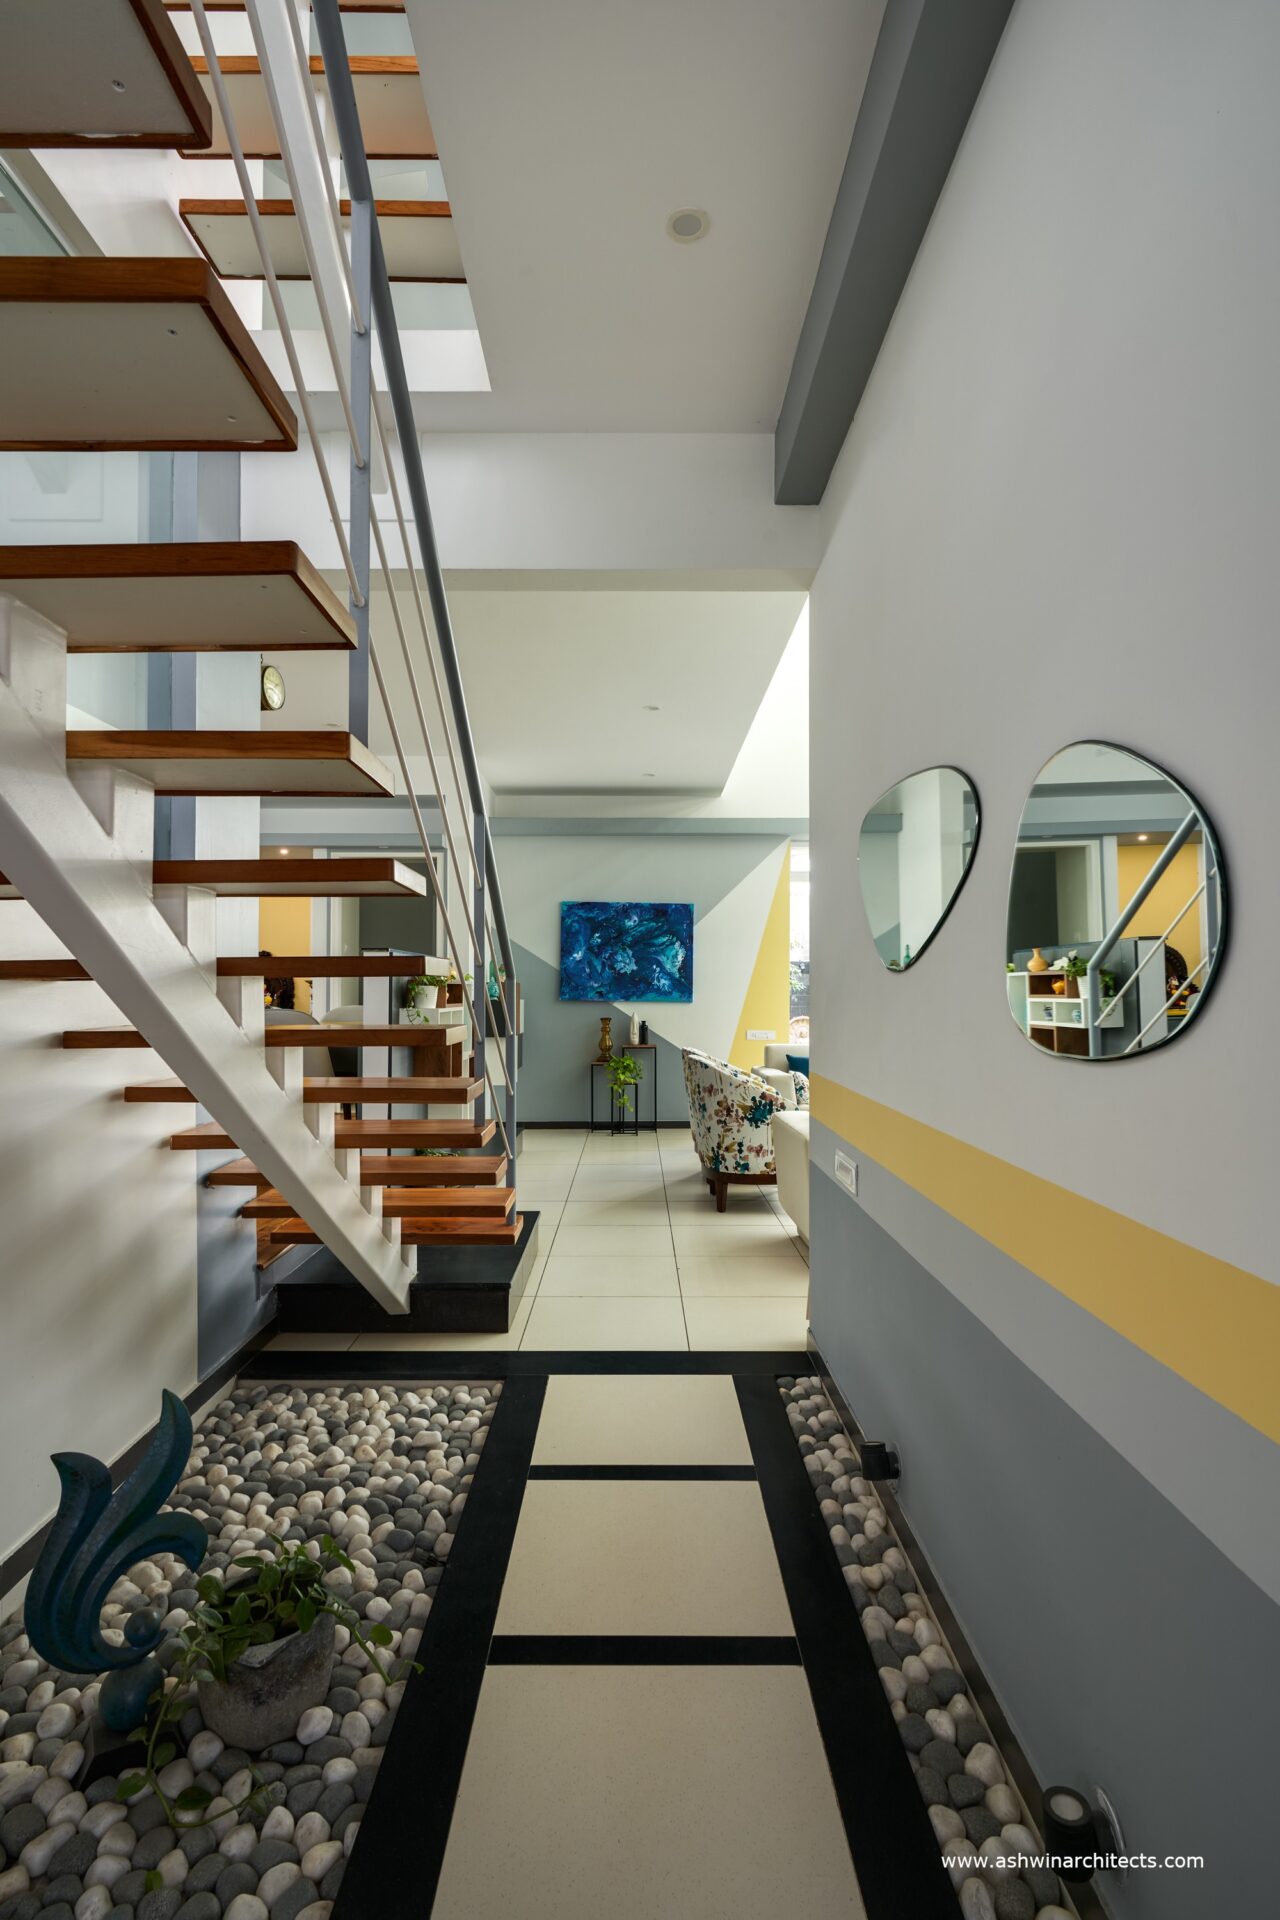 40x60-plot-Staircase-Kailash-Residence-40-x-60-Plot-3BHK-Duplex-Bungalow-3500-sft.-Family-Home-Design